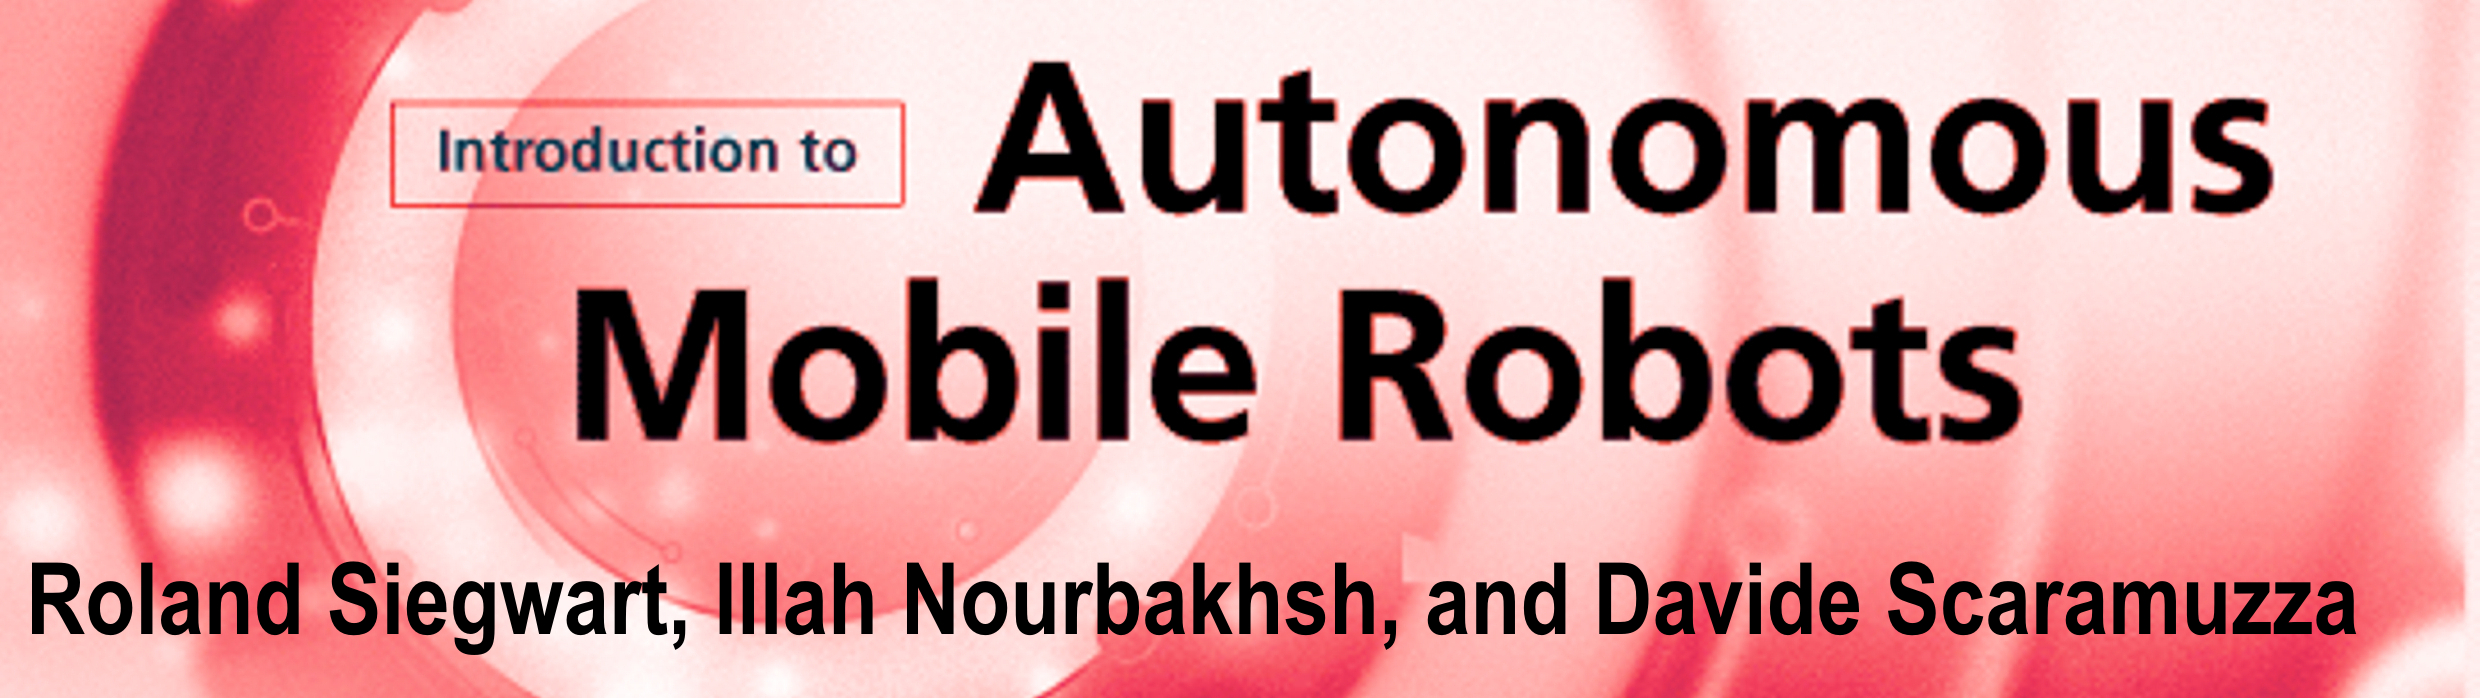 Introduction Autonomous Mobile Robots: Roland Siegwart, Illah Nourbakhsh, and Davide Scaramuzza